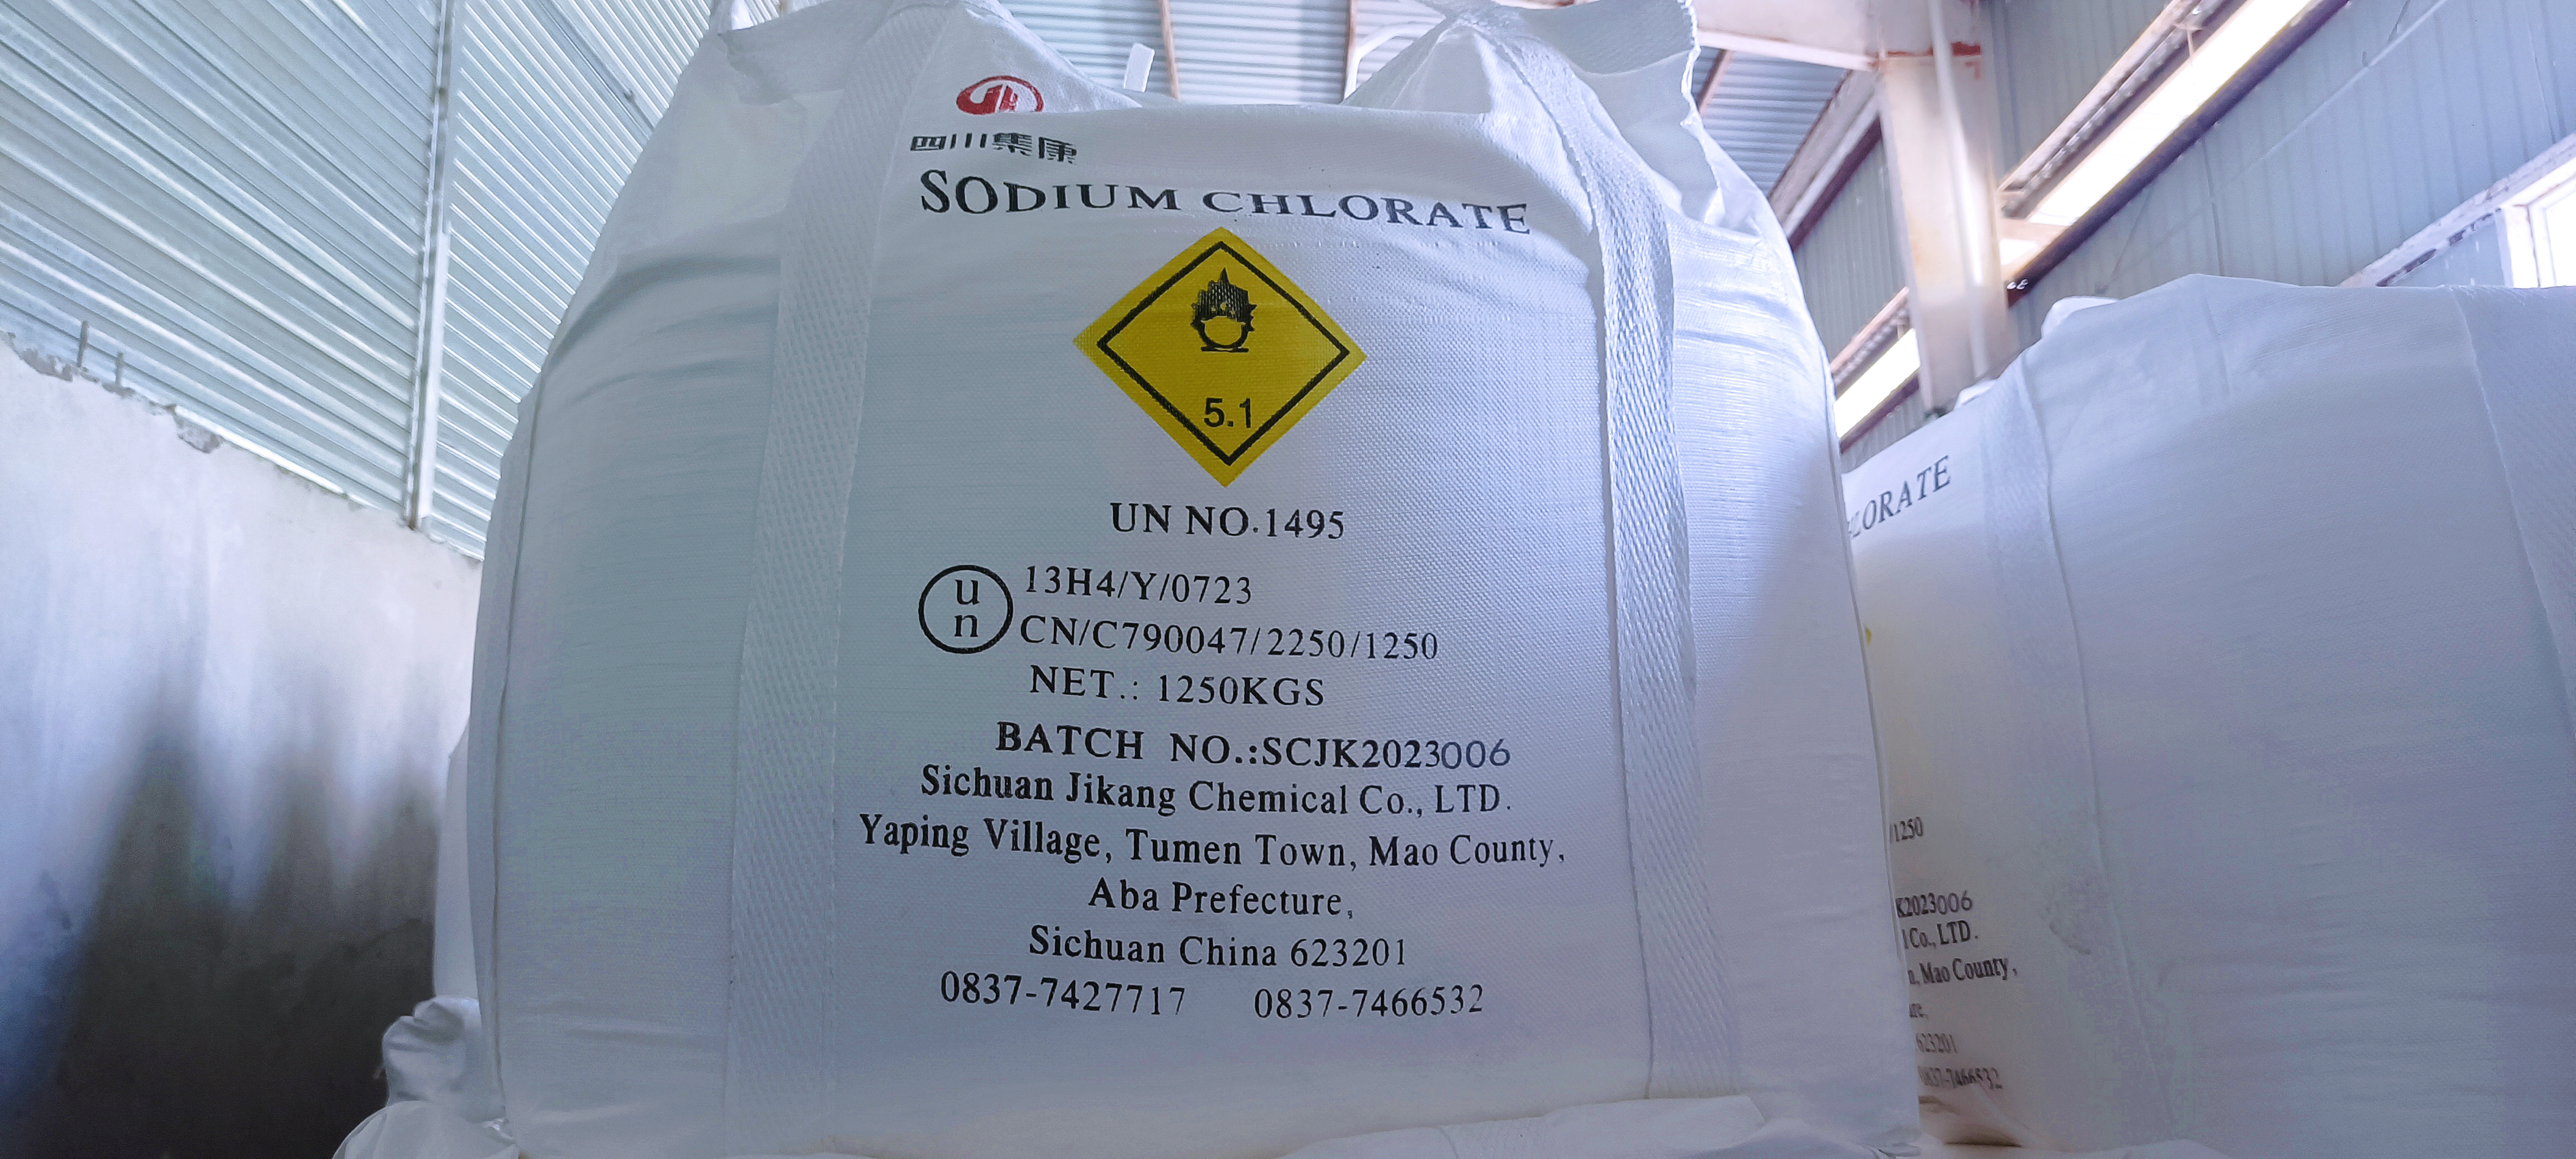 Industrial Grade Soluble Sodium Chlorate in Hydrometallurgy